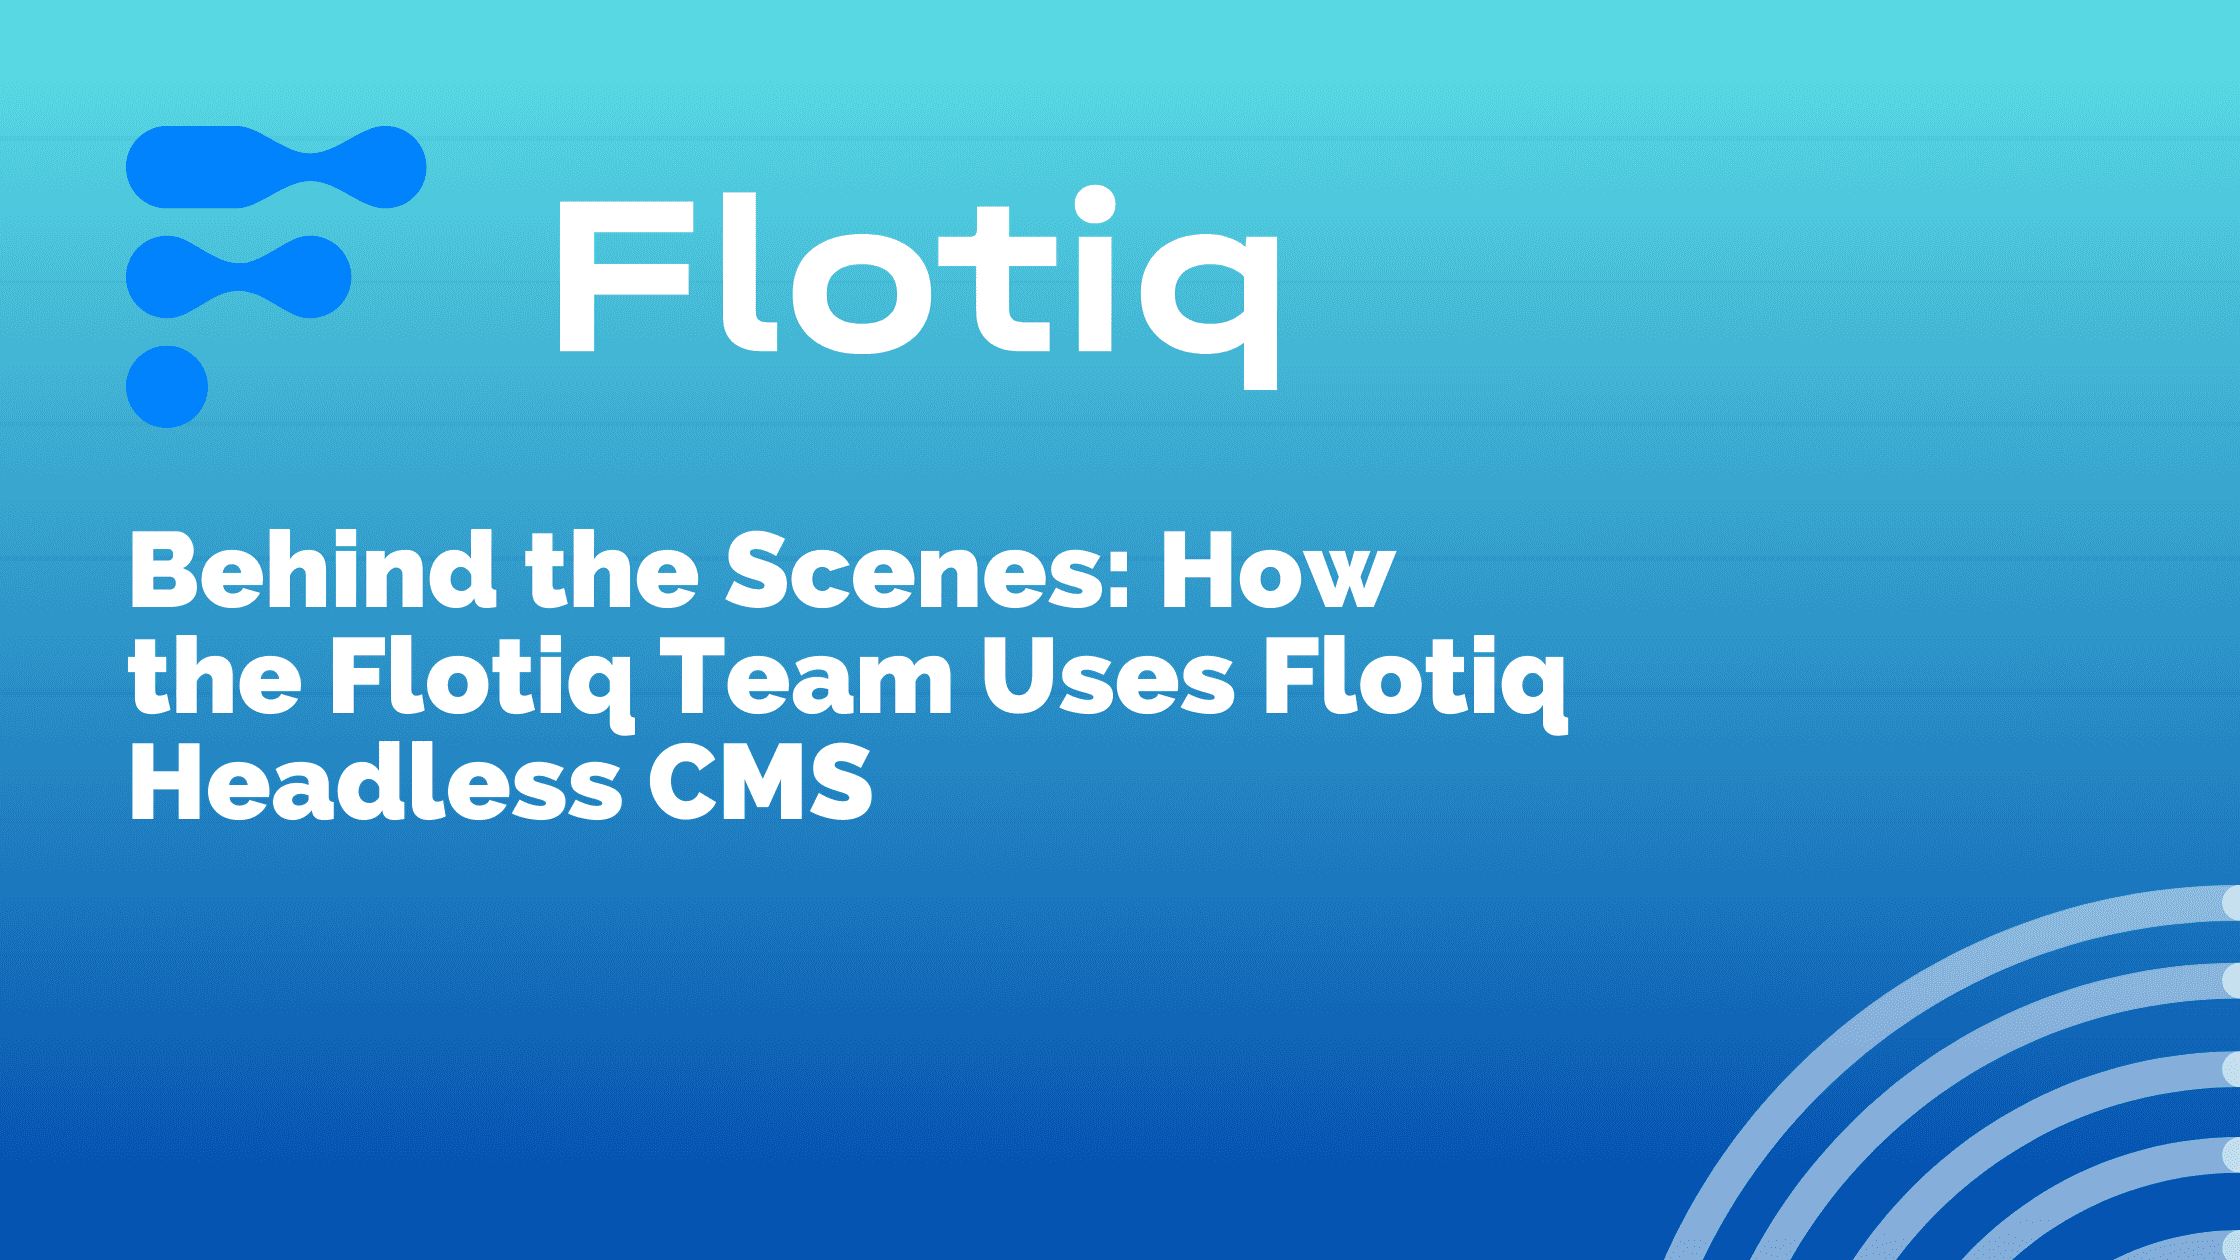 Behind the Scenes: How the Flotiq Team Uses Flotiq Headless CMS